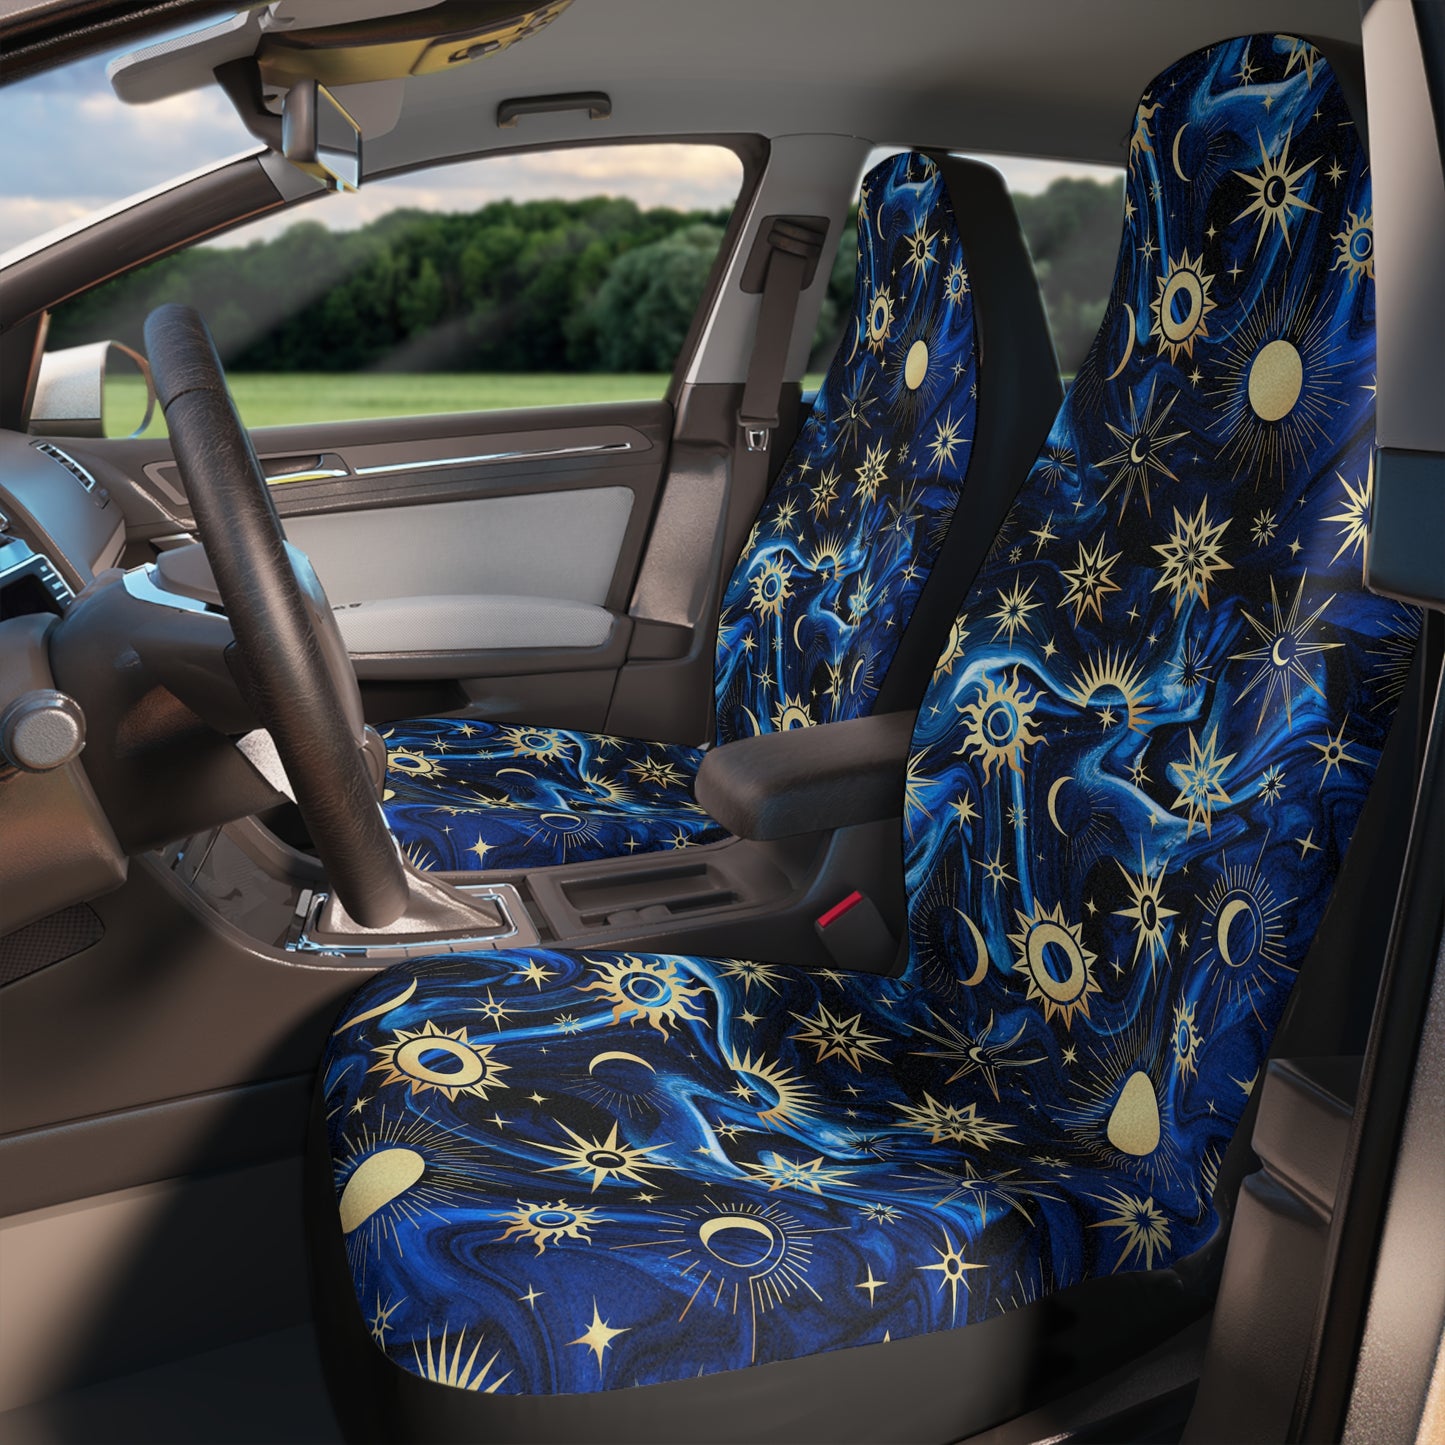 Car Seat Covers - Celestial Sun, Moon, & Stars Car Seat Covers (2 Seat Covers), Easy To Install, Elastic Fastening and Snug Fit